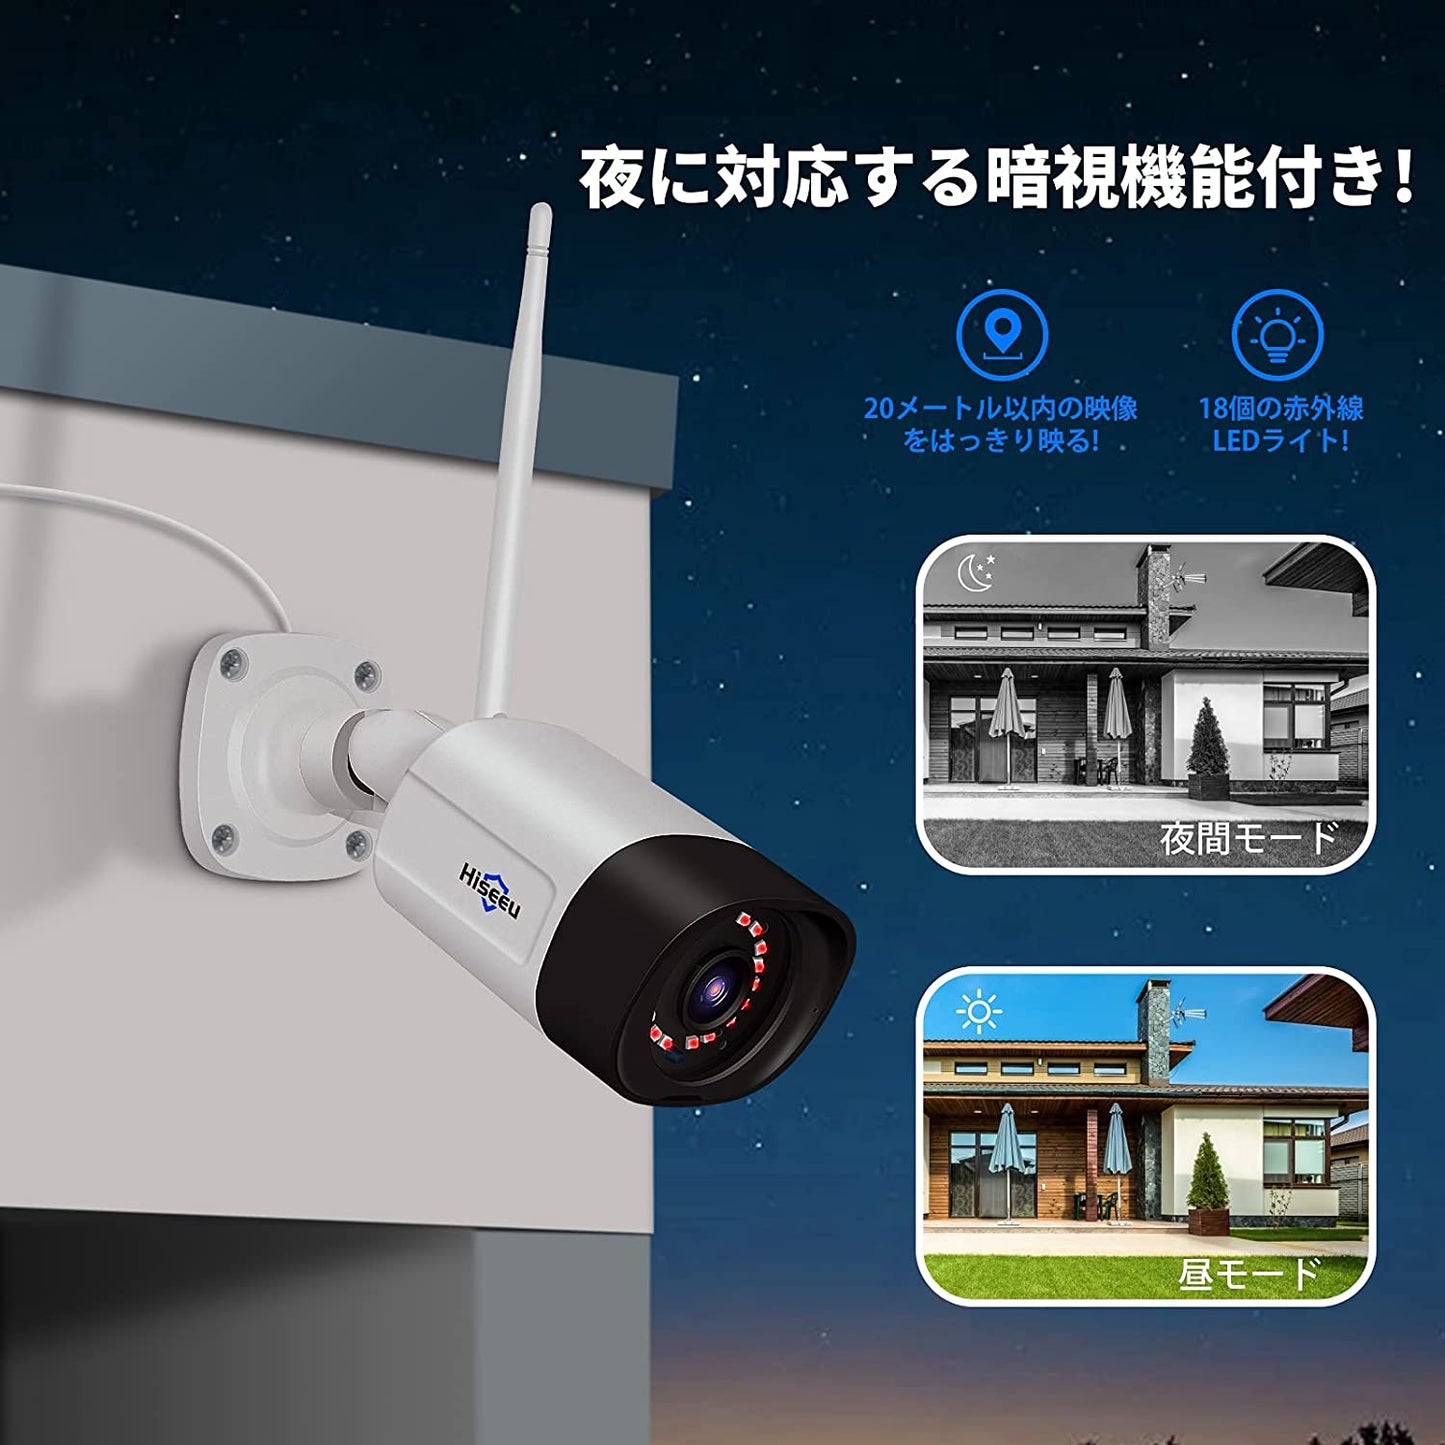 wifi増強版 300画素 防犯カメラ ネットワークカメラ　IP66級防水防塵/双方向音声/遠隔監視　 屋外 屋内無線接続カメラ（Hiseeu製NVRに追加することができます）